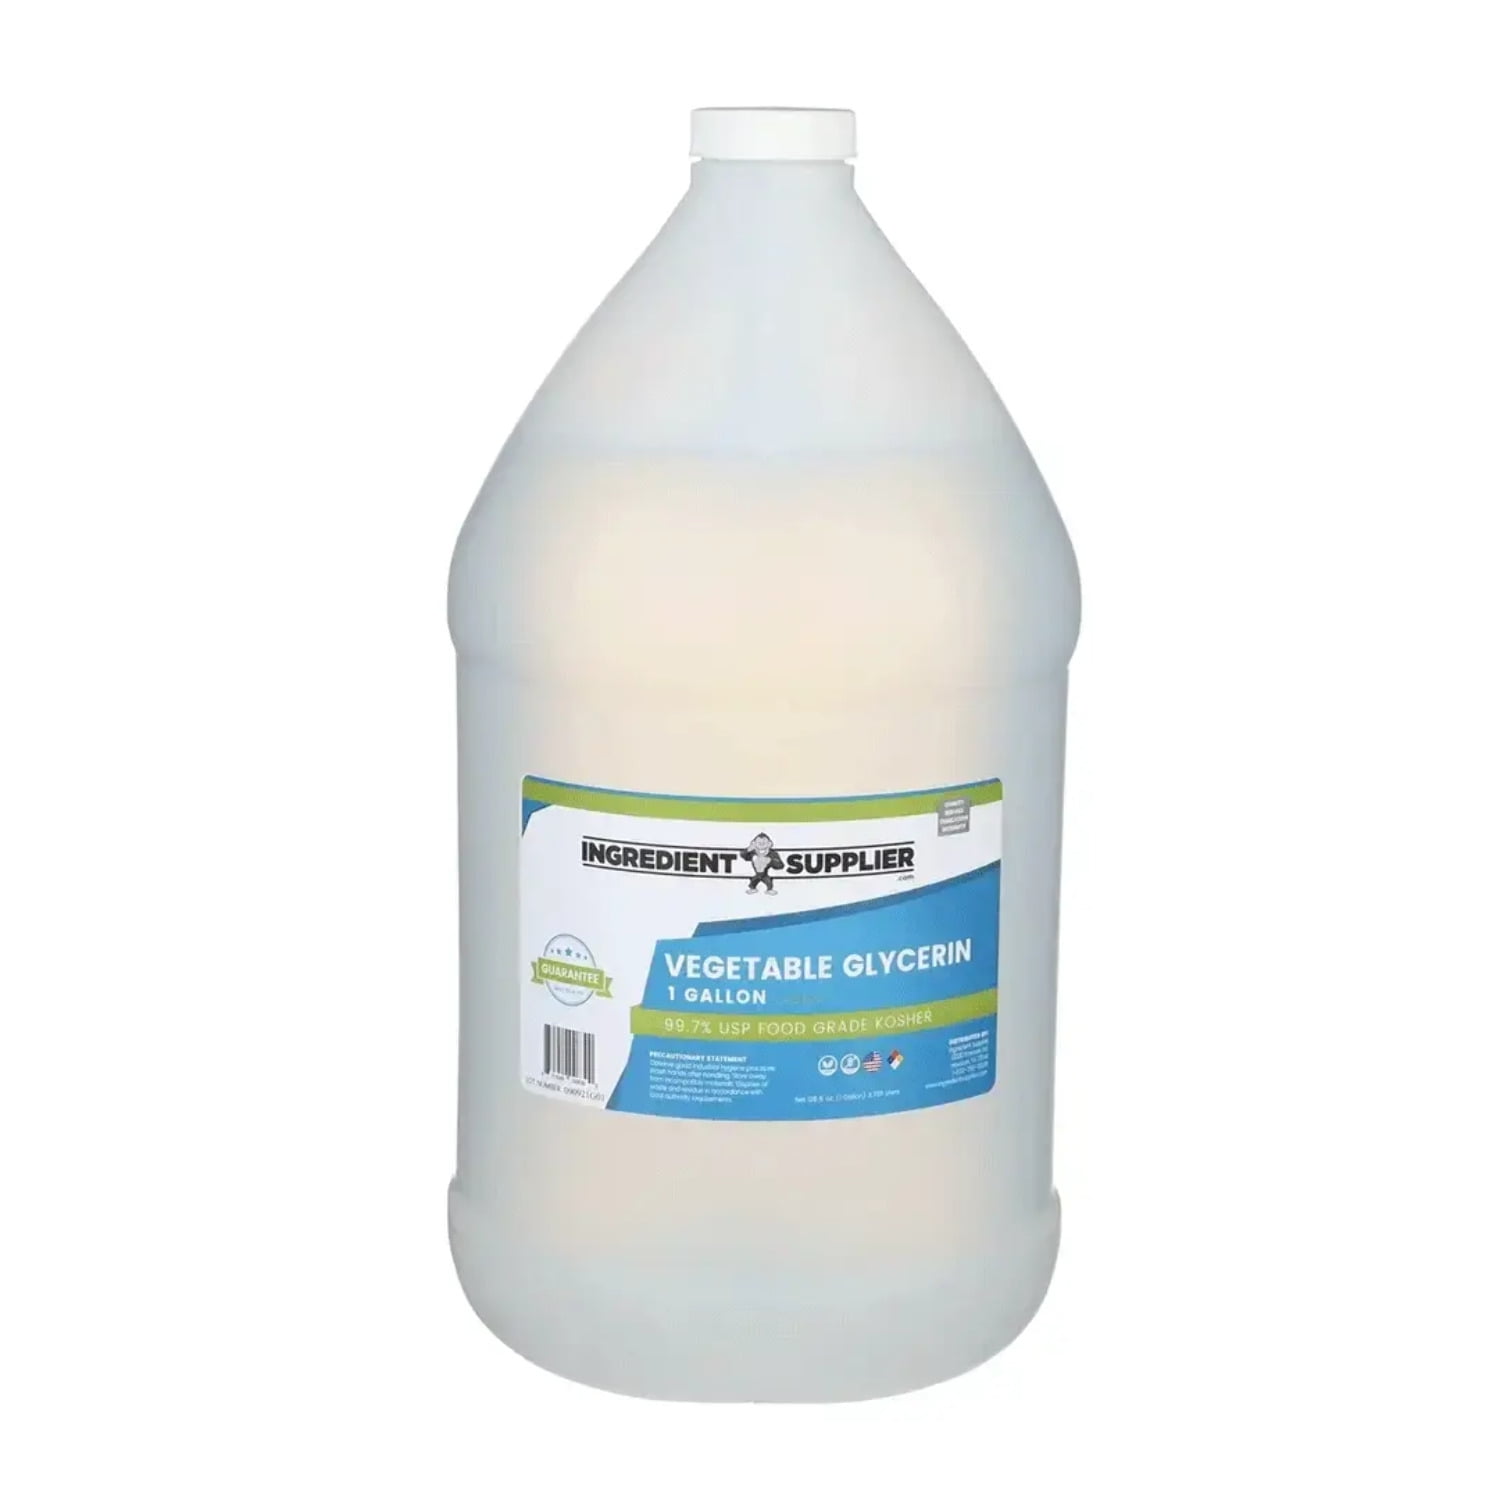 naissance Vegetable Glycerin (Glycerol) Liquid 32 fl oz - Pure USP  Pharmaceutical Grade Kosher Vegan Premium Quality Natural Humectant Non GMO